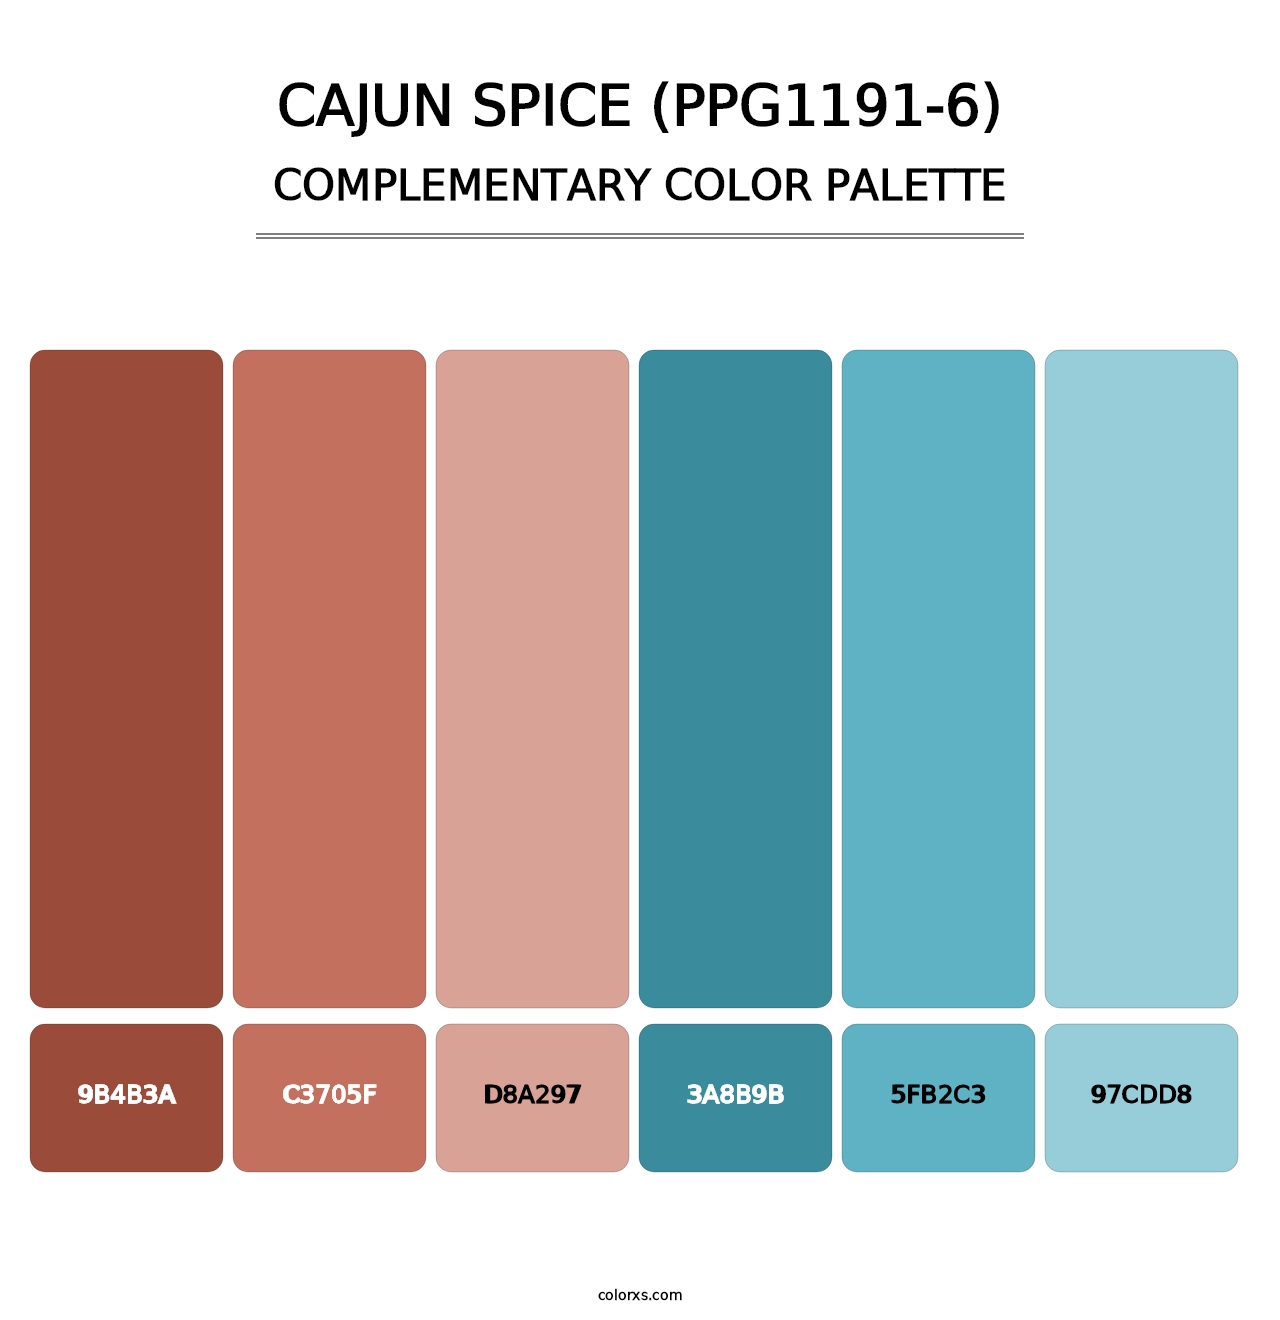 Cajun Spice (PPG1191-6) - Complementary Color Palette